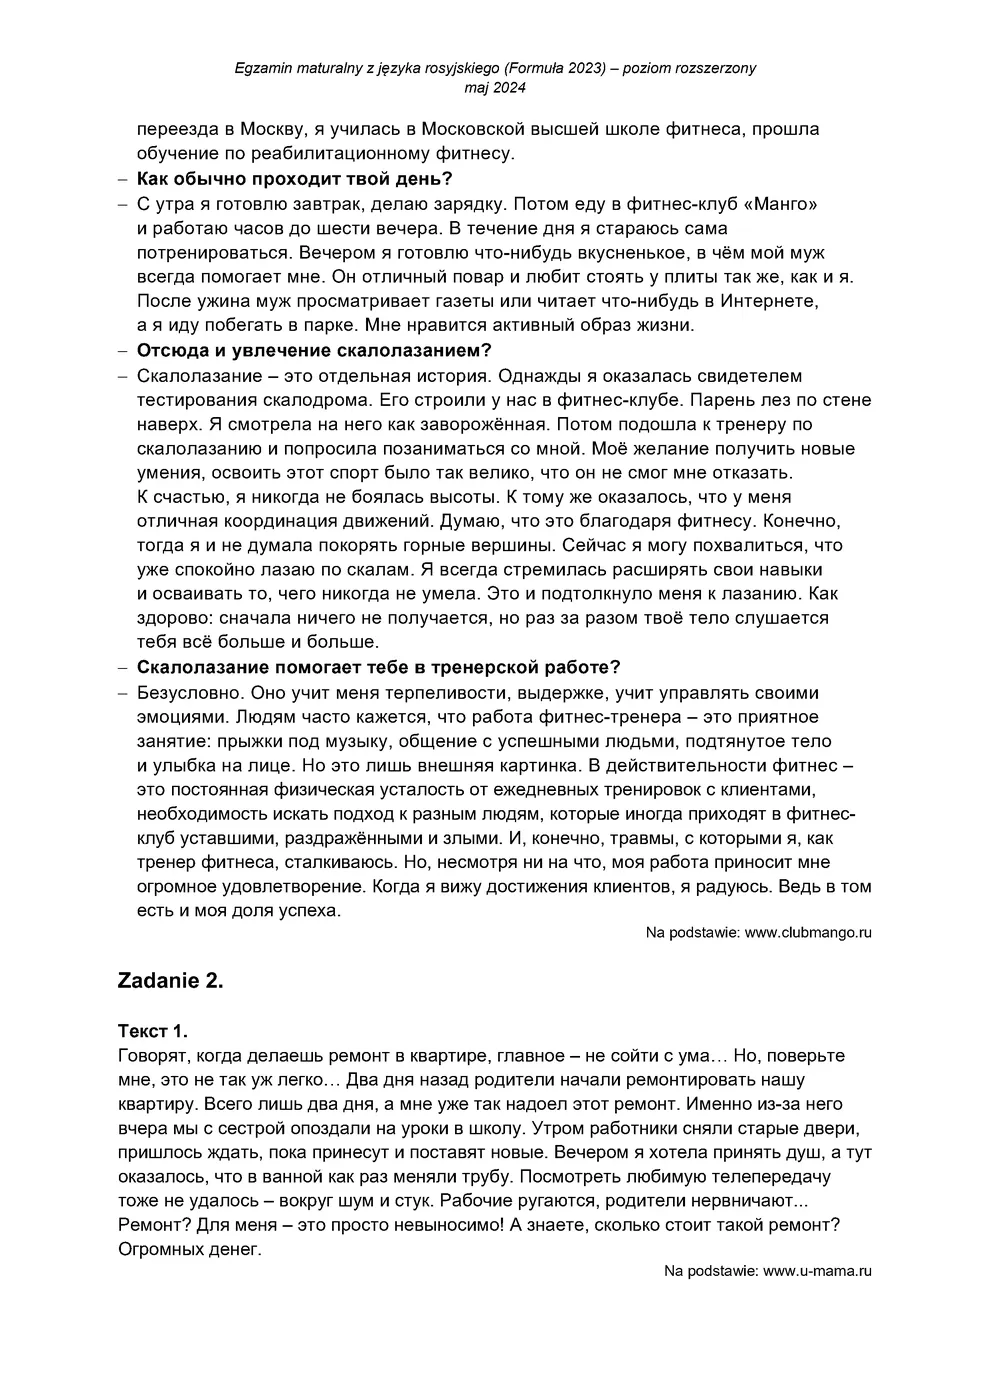 transkrypcja - rosyjski rozszerzony - matura 2024 - maj - 0002